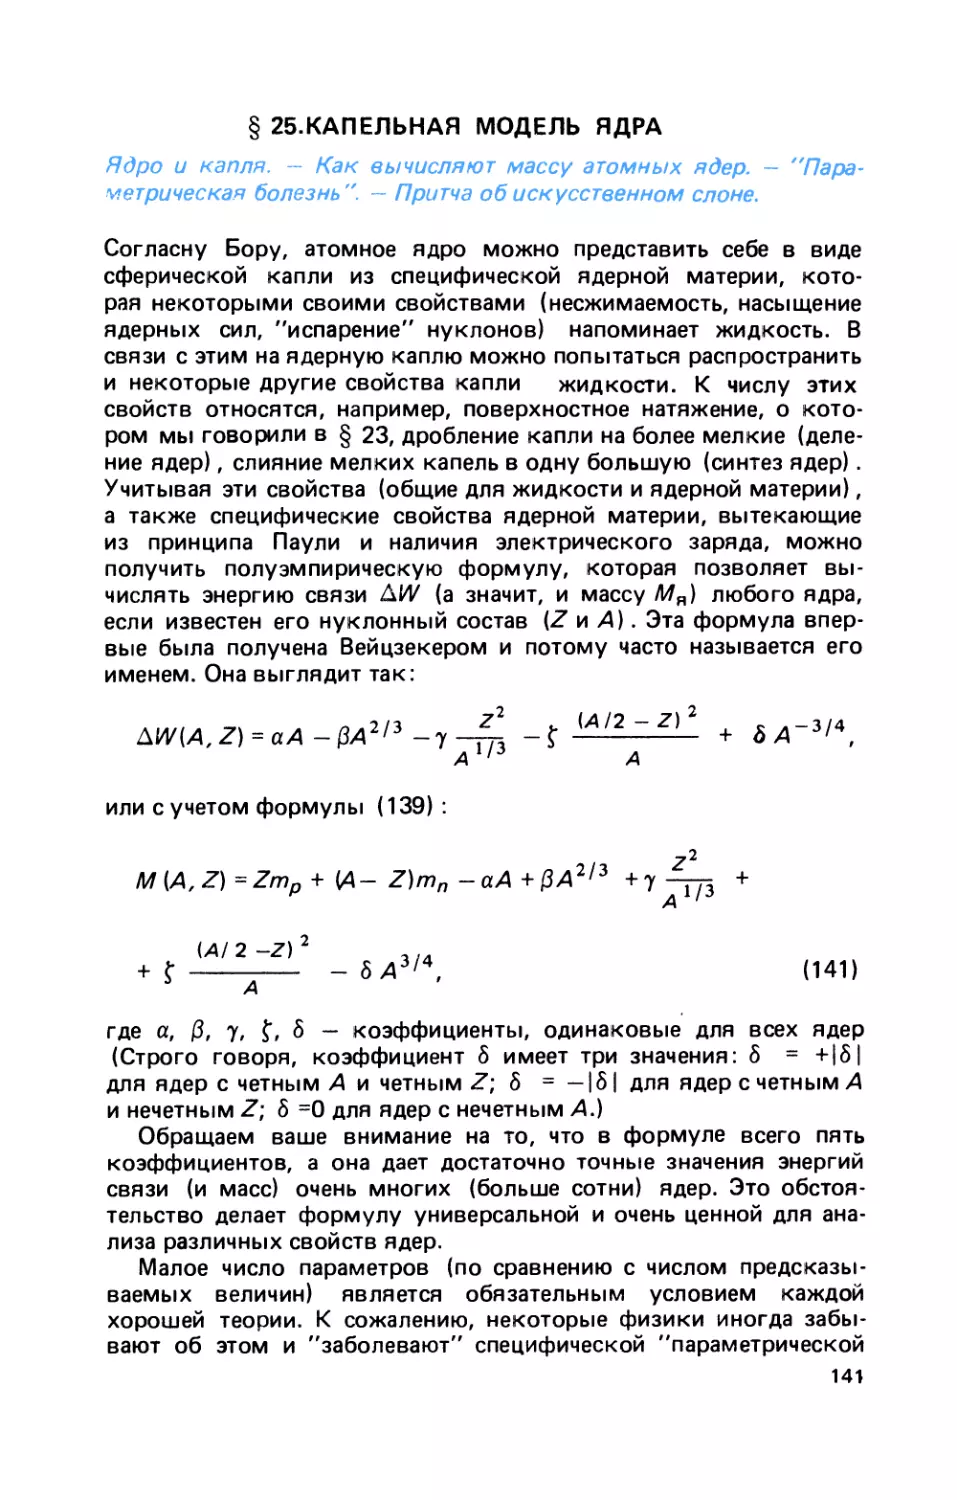 § 25. Капельная модель ядра